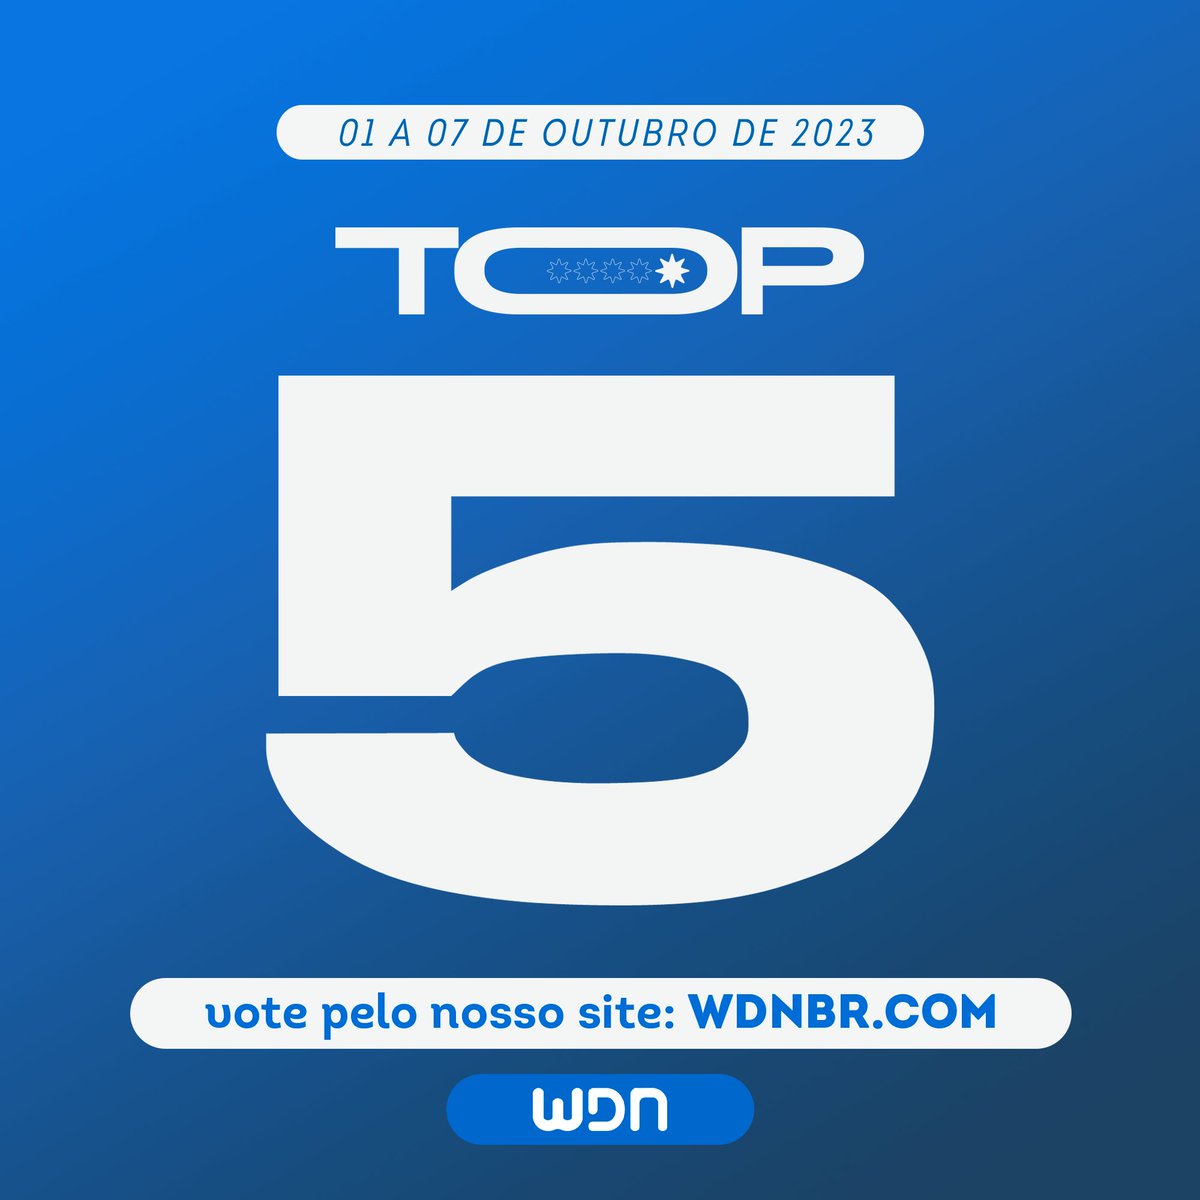 WDN - World Dubbing News on X: ⚡ Novos dubladores juntam-se ao